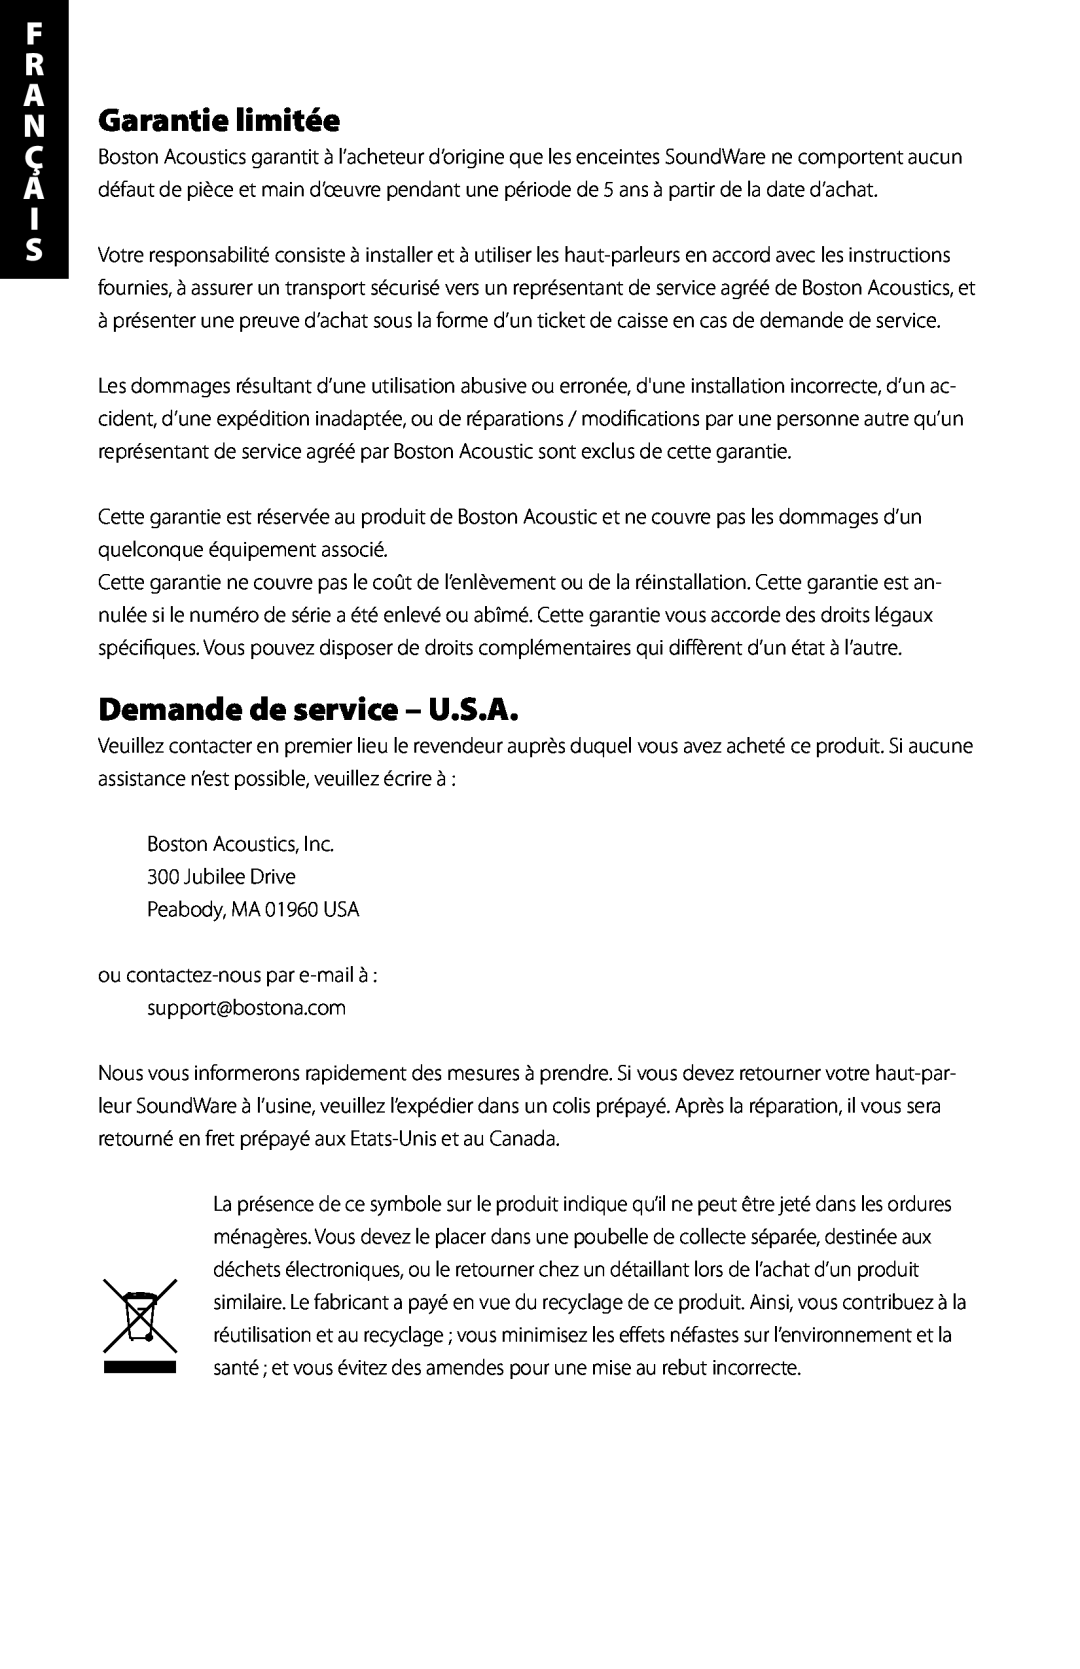 Boston Acoustics Indoor / Outdoor Speaker manual NGarantie limitée, Demande de service - U.S.A, F R A 